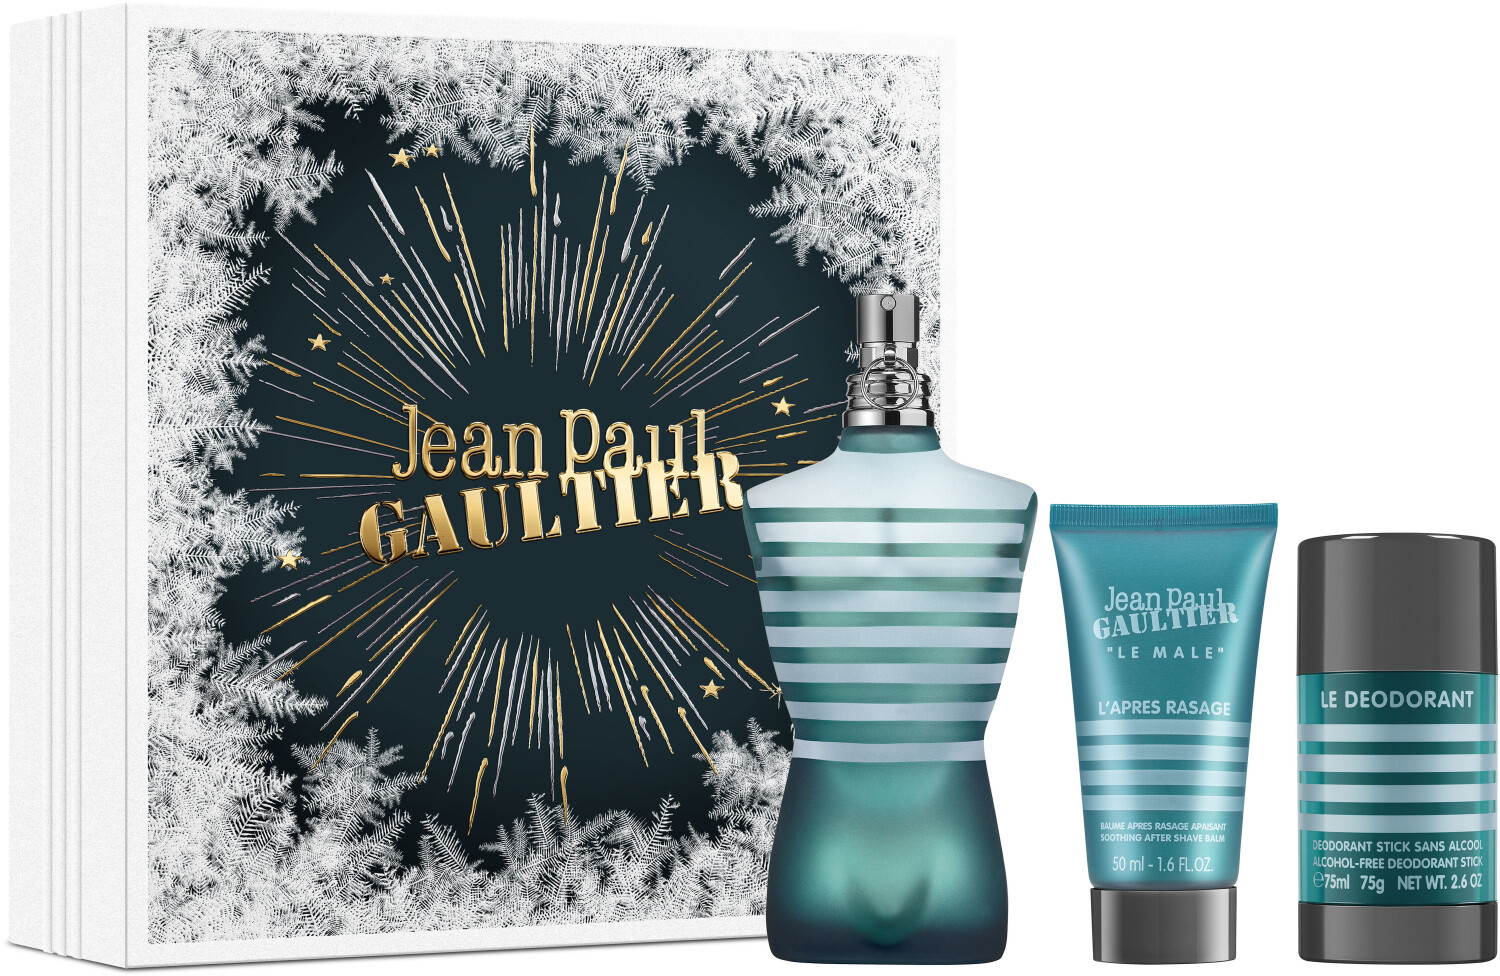 Le Male Jean Paul Gaultier Gift Boxes 125ml